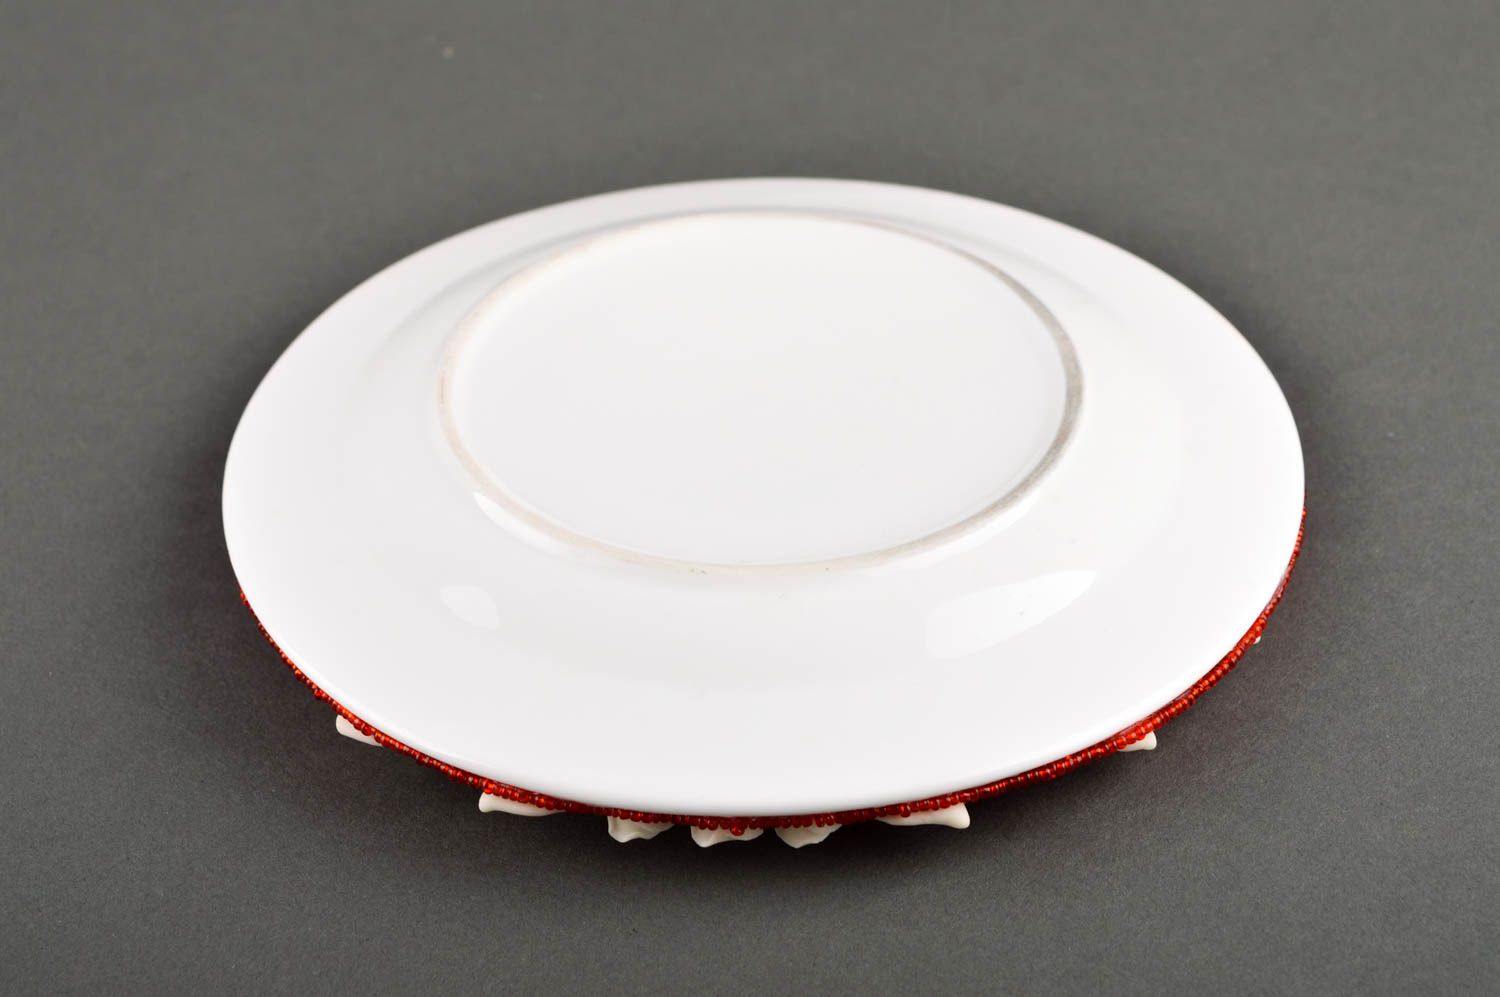 Свадебная тарелка хэнд мэйд посуда на свадьбу красивая посуда красная тарелка фото 5